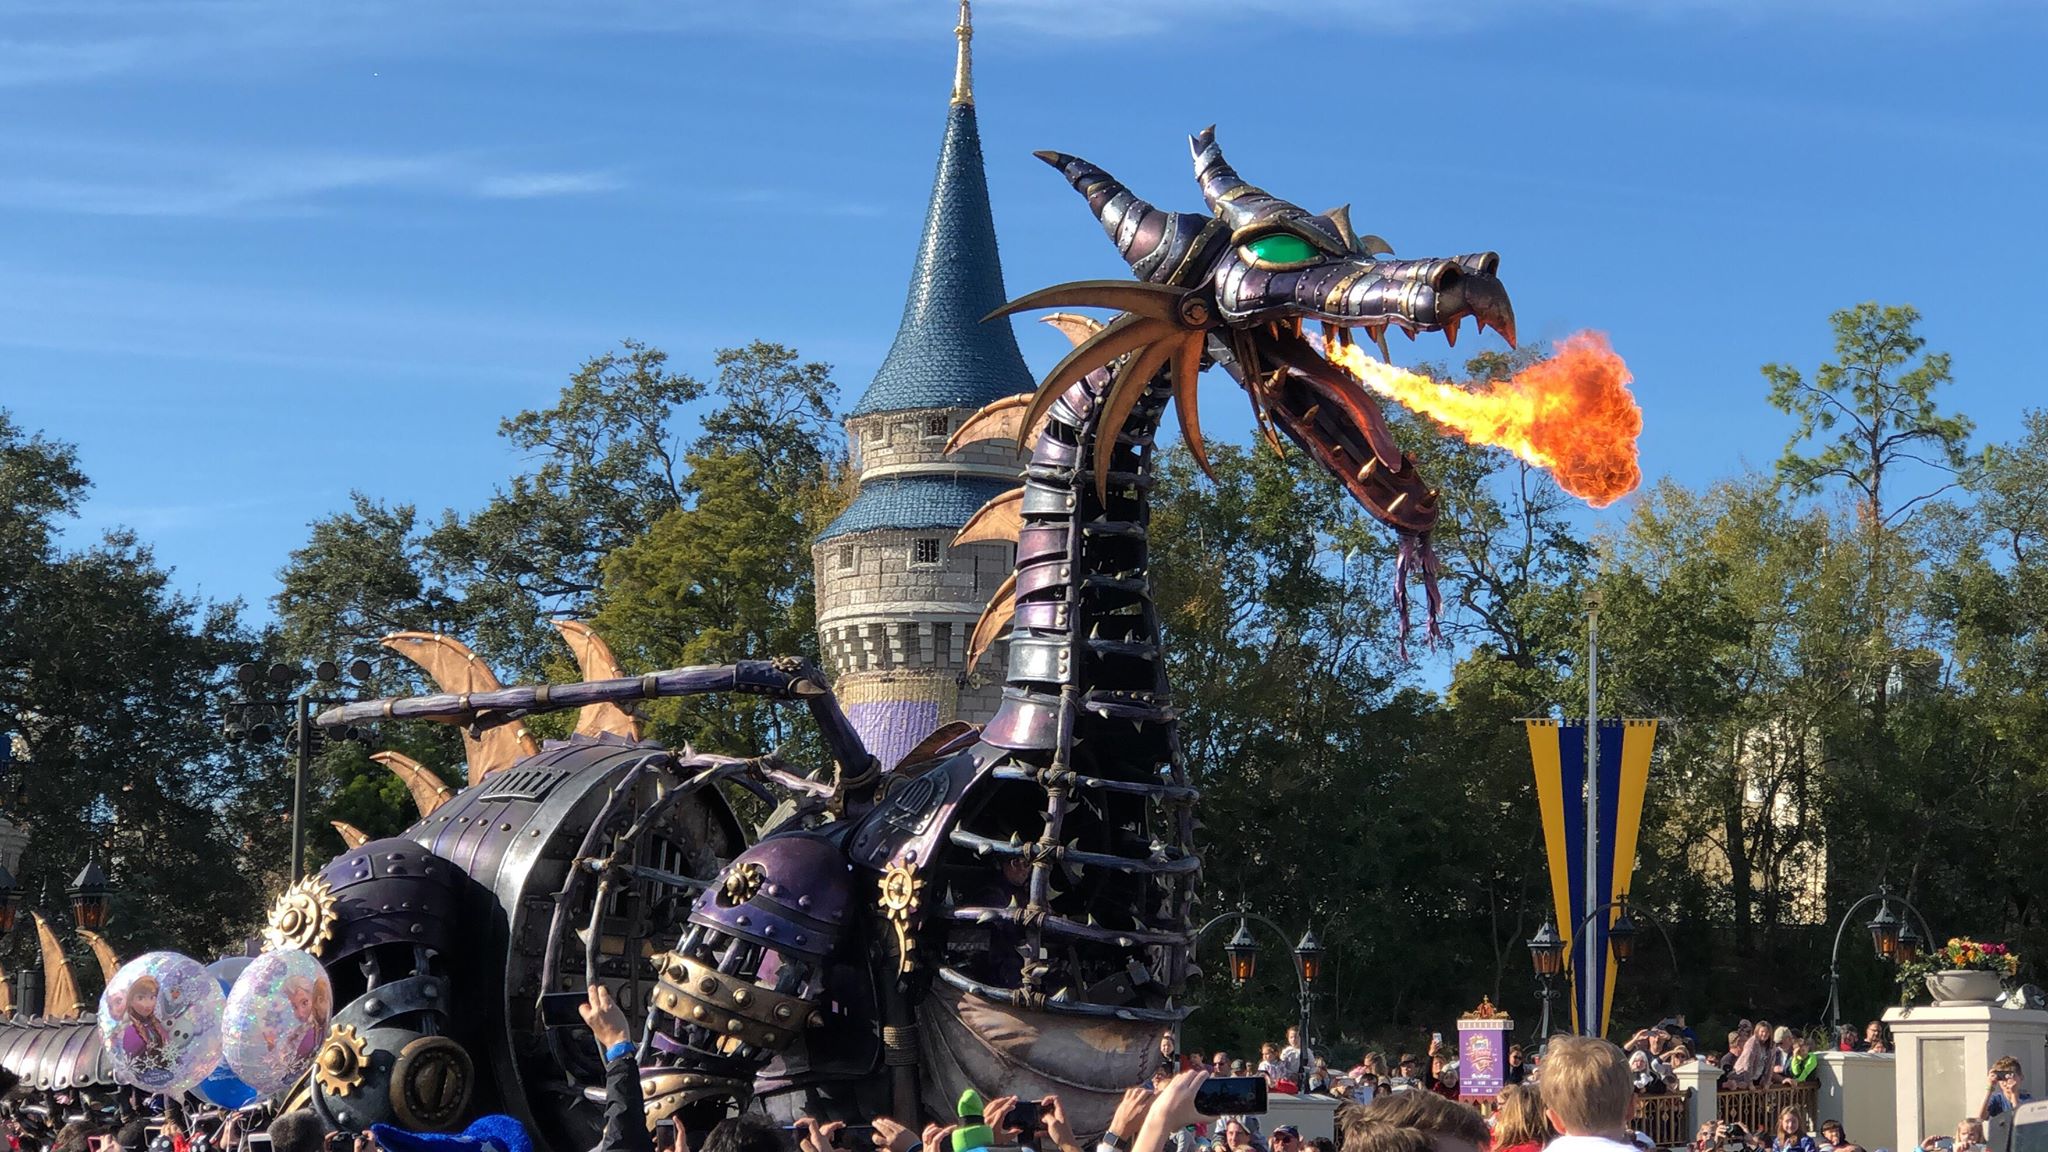 Maleficent Dragon Returns to Festival of Fantasy Parade